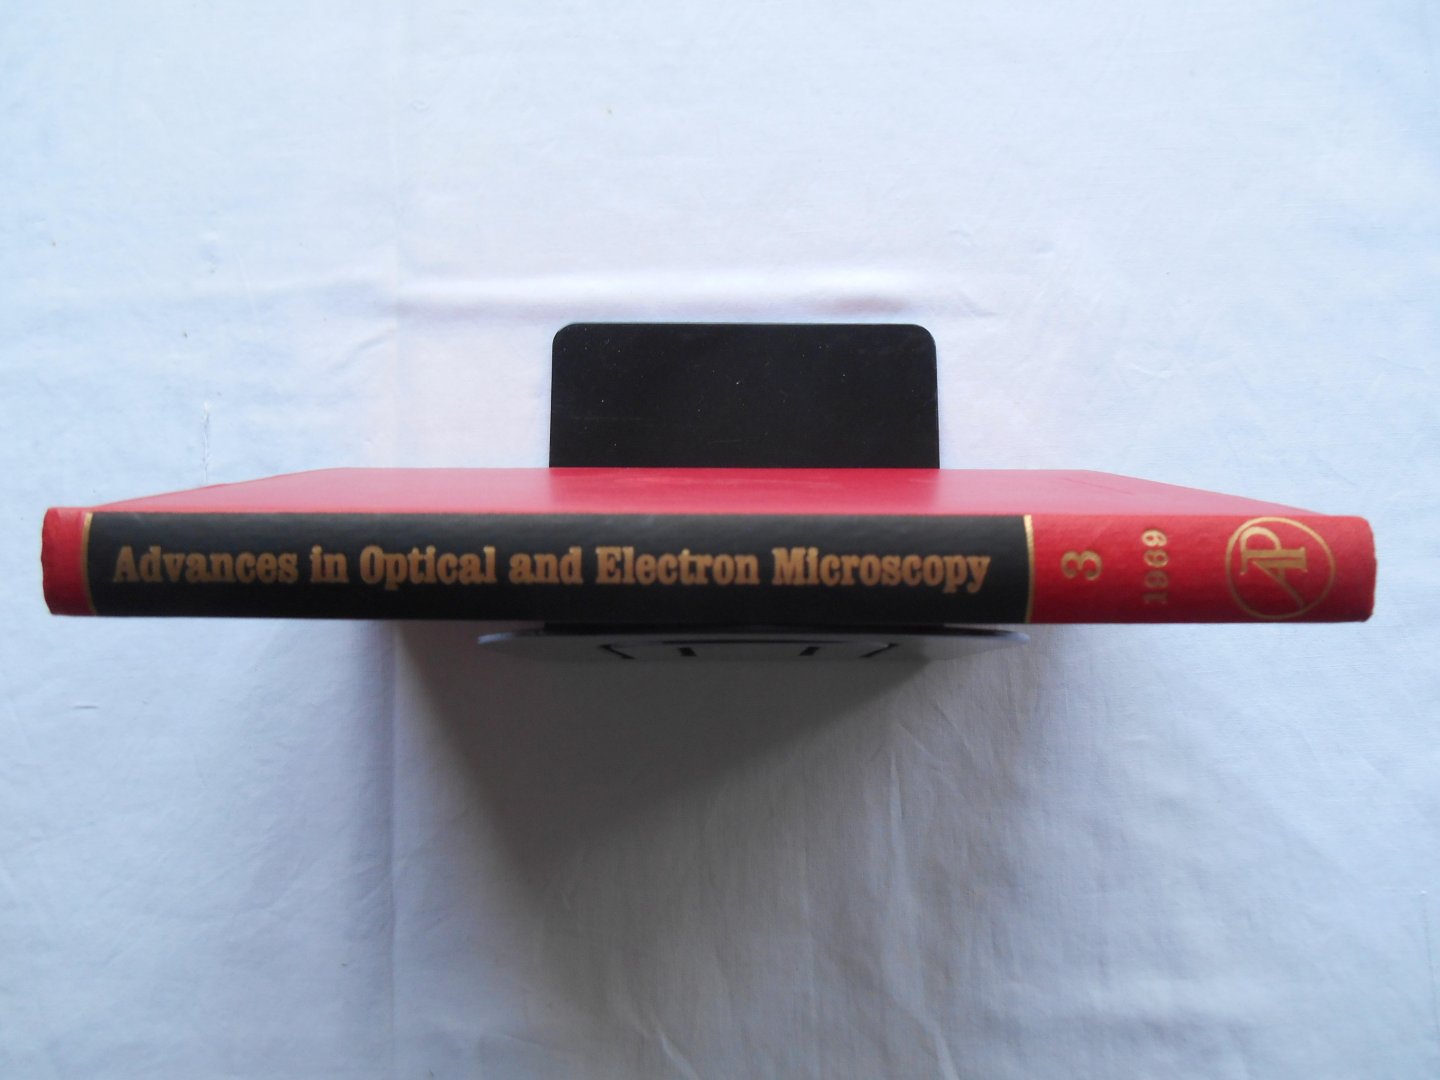 R. Barer & V. E. Cosslett - Advances in Optical and Electron Microscopy, Vol. 3